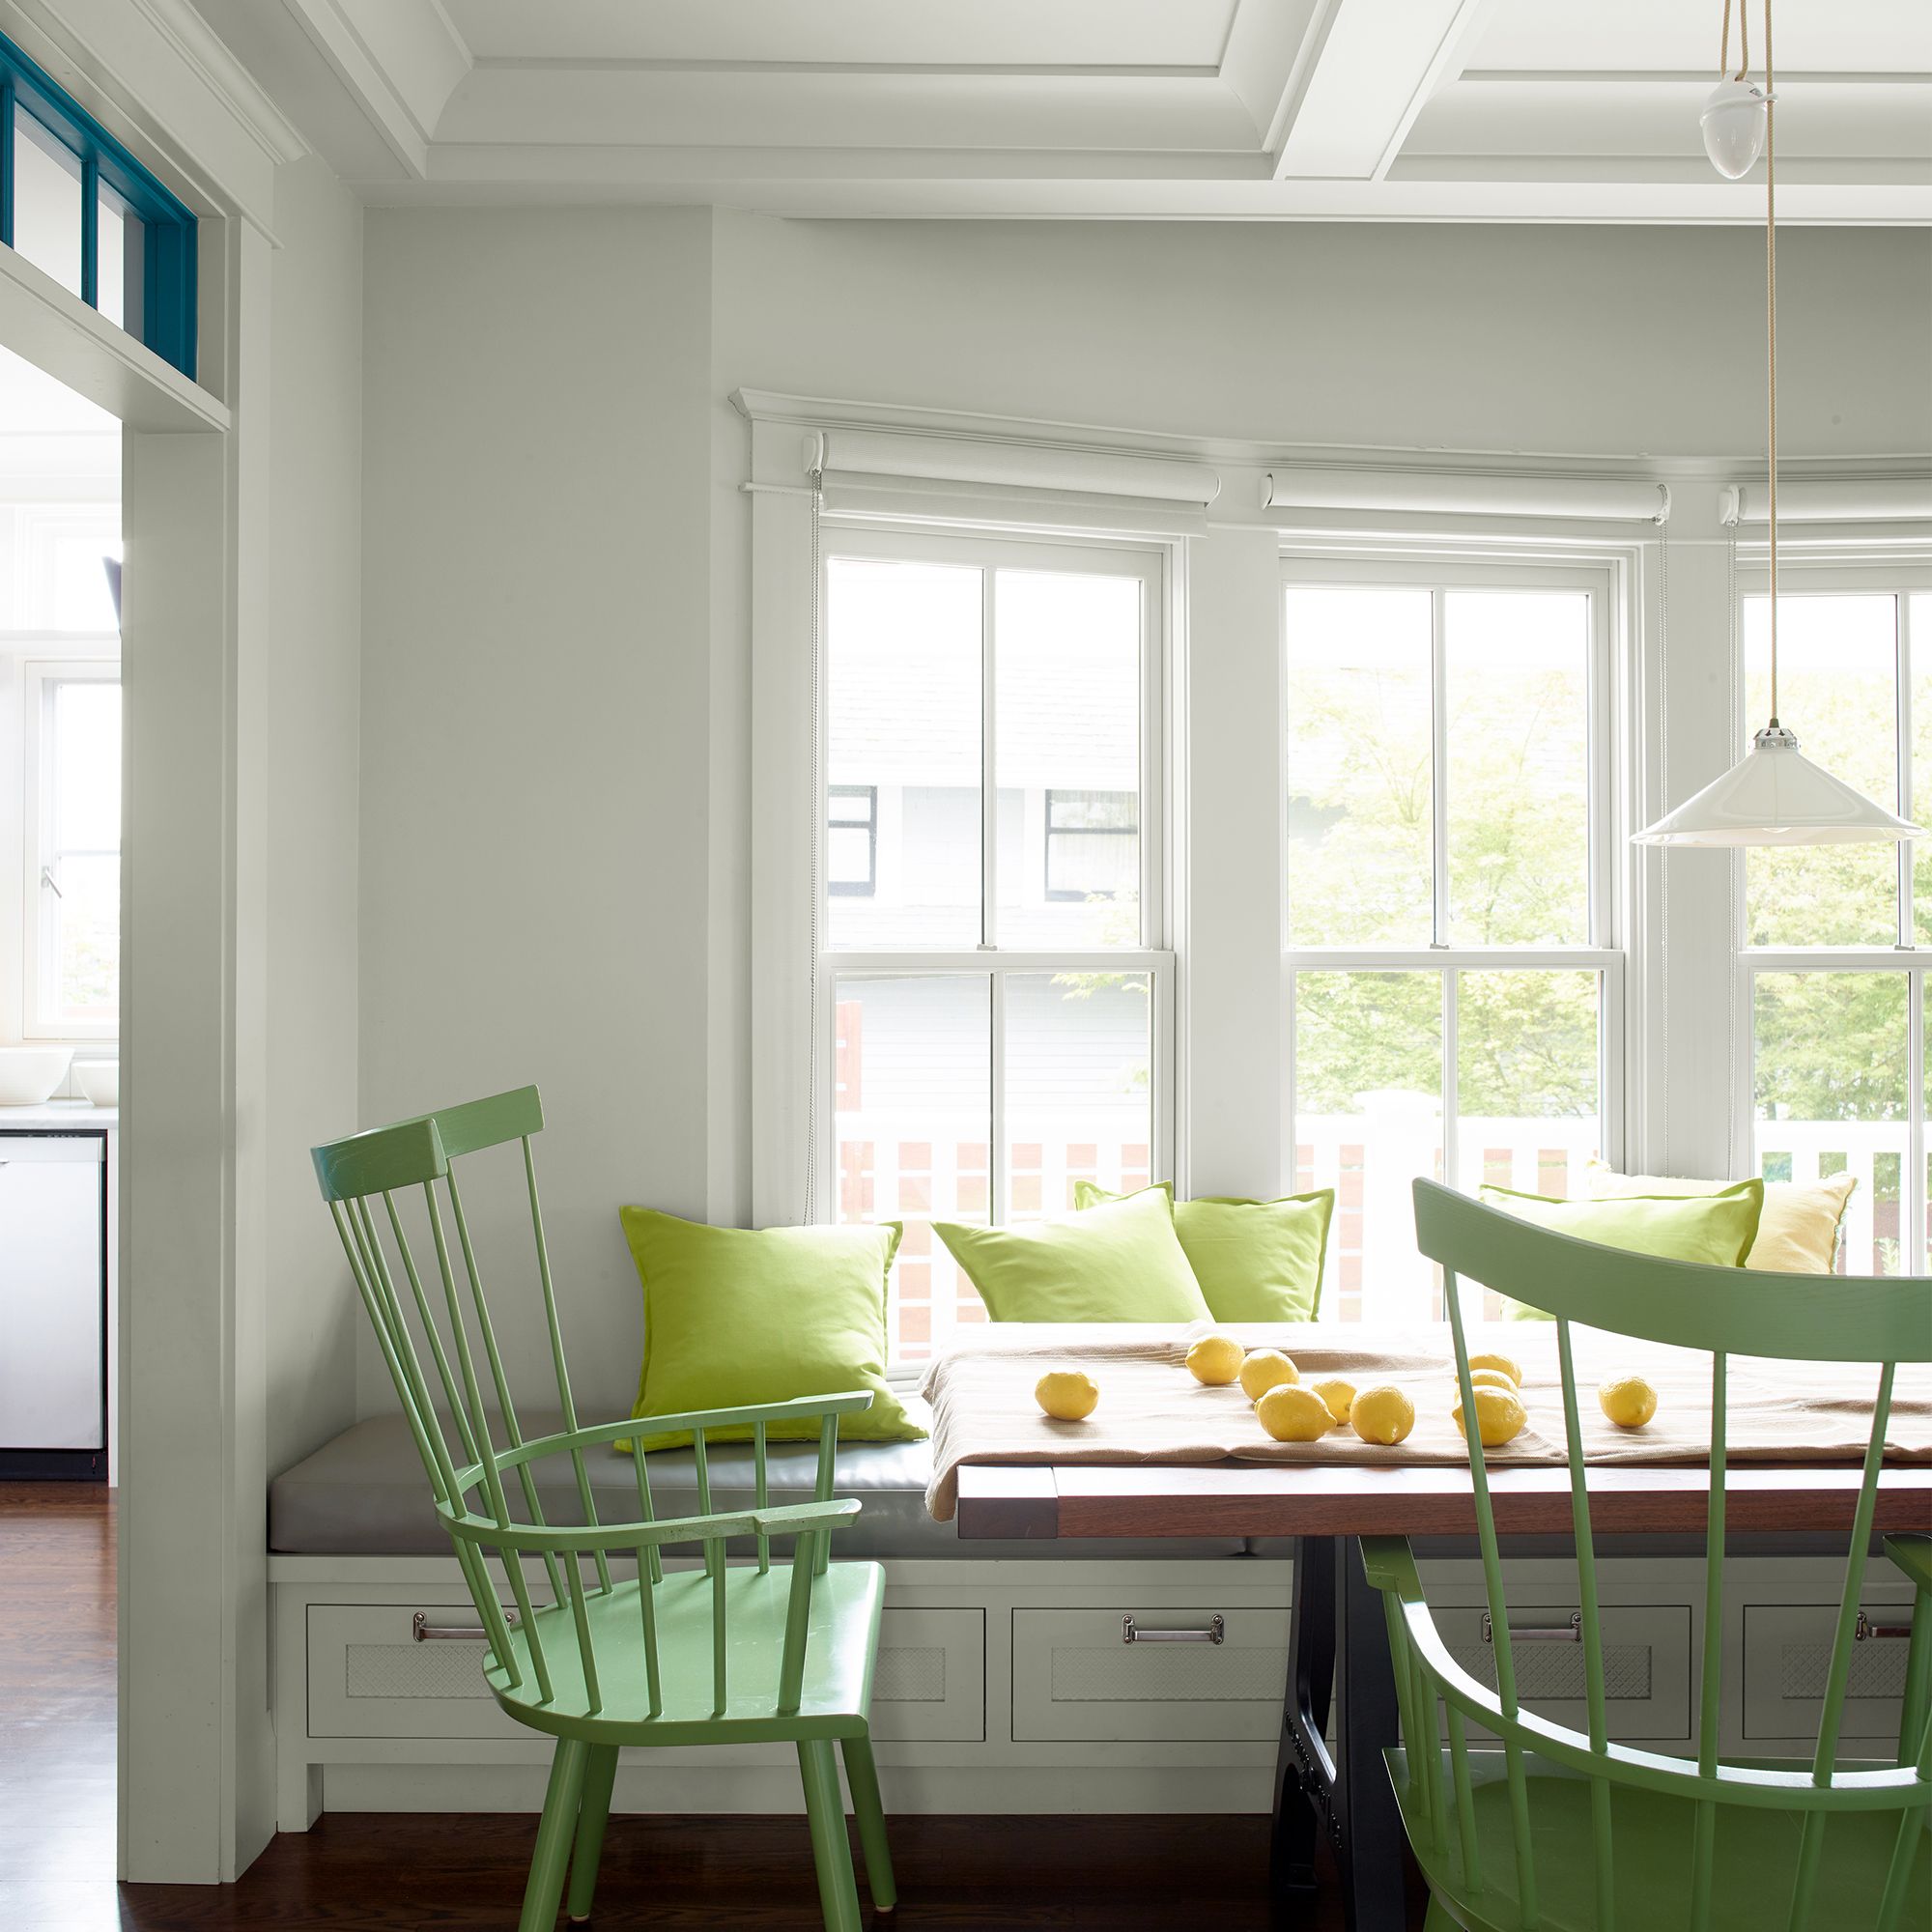 Benjamin Moore Gray Owl dining room walls enhance the bright citrus-green chairs.